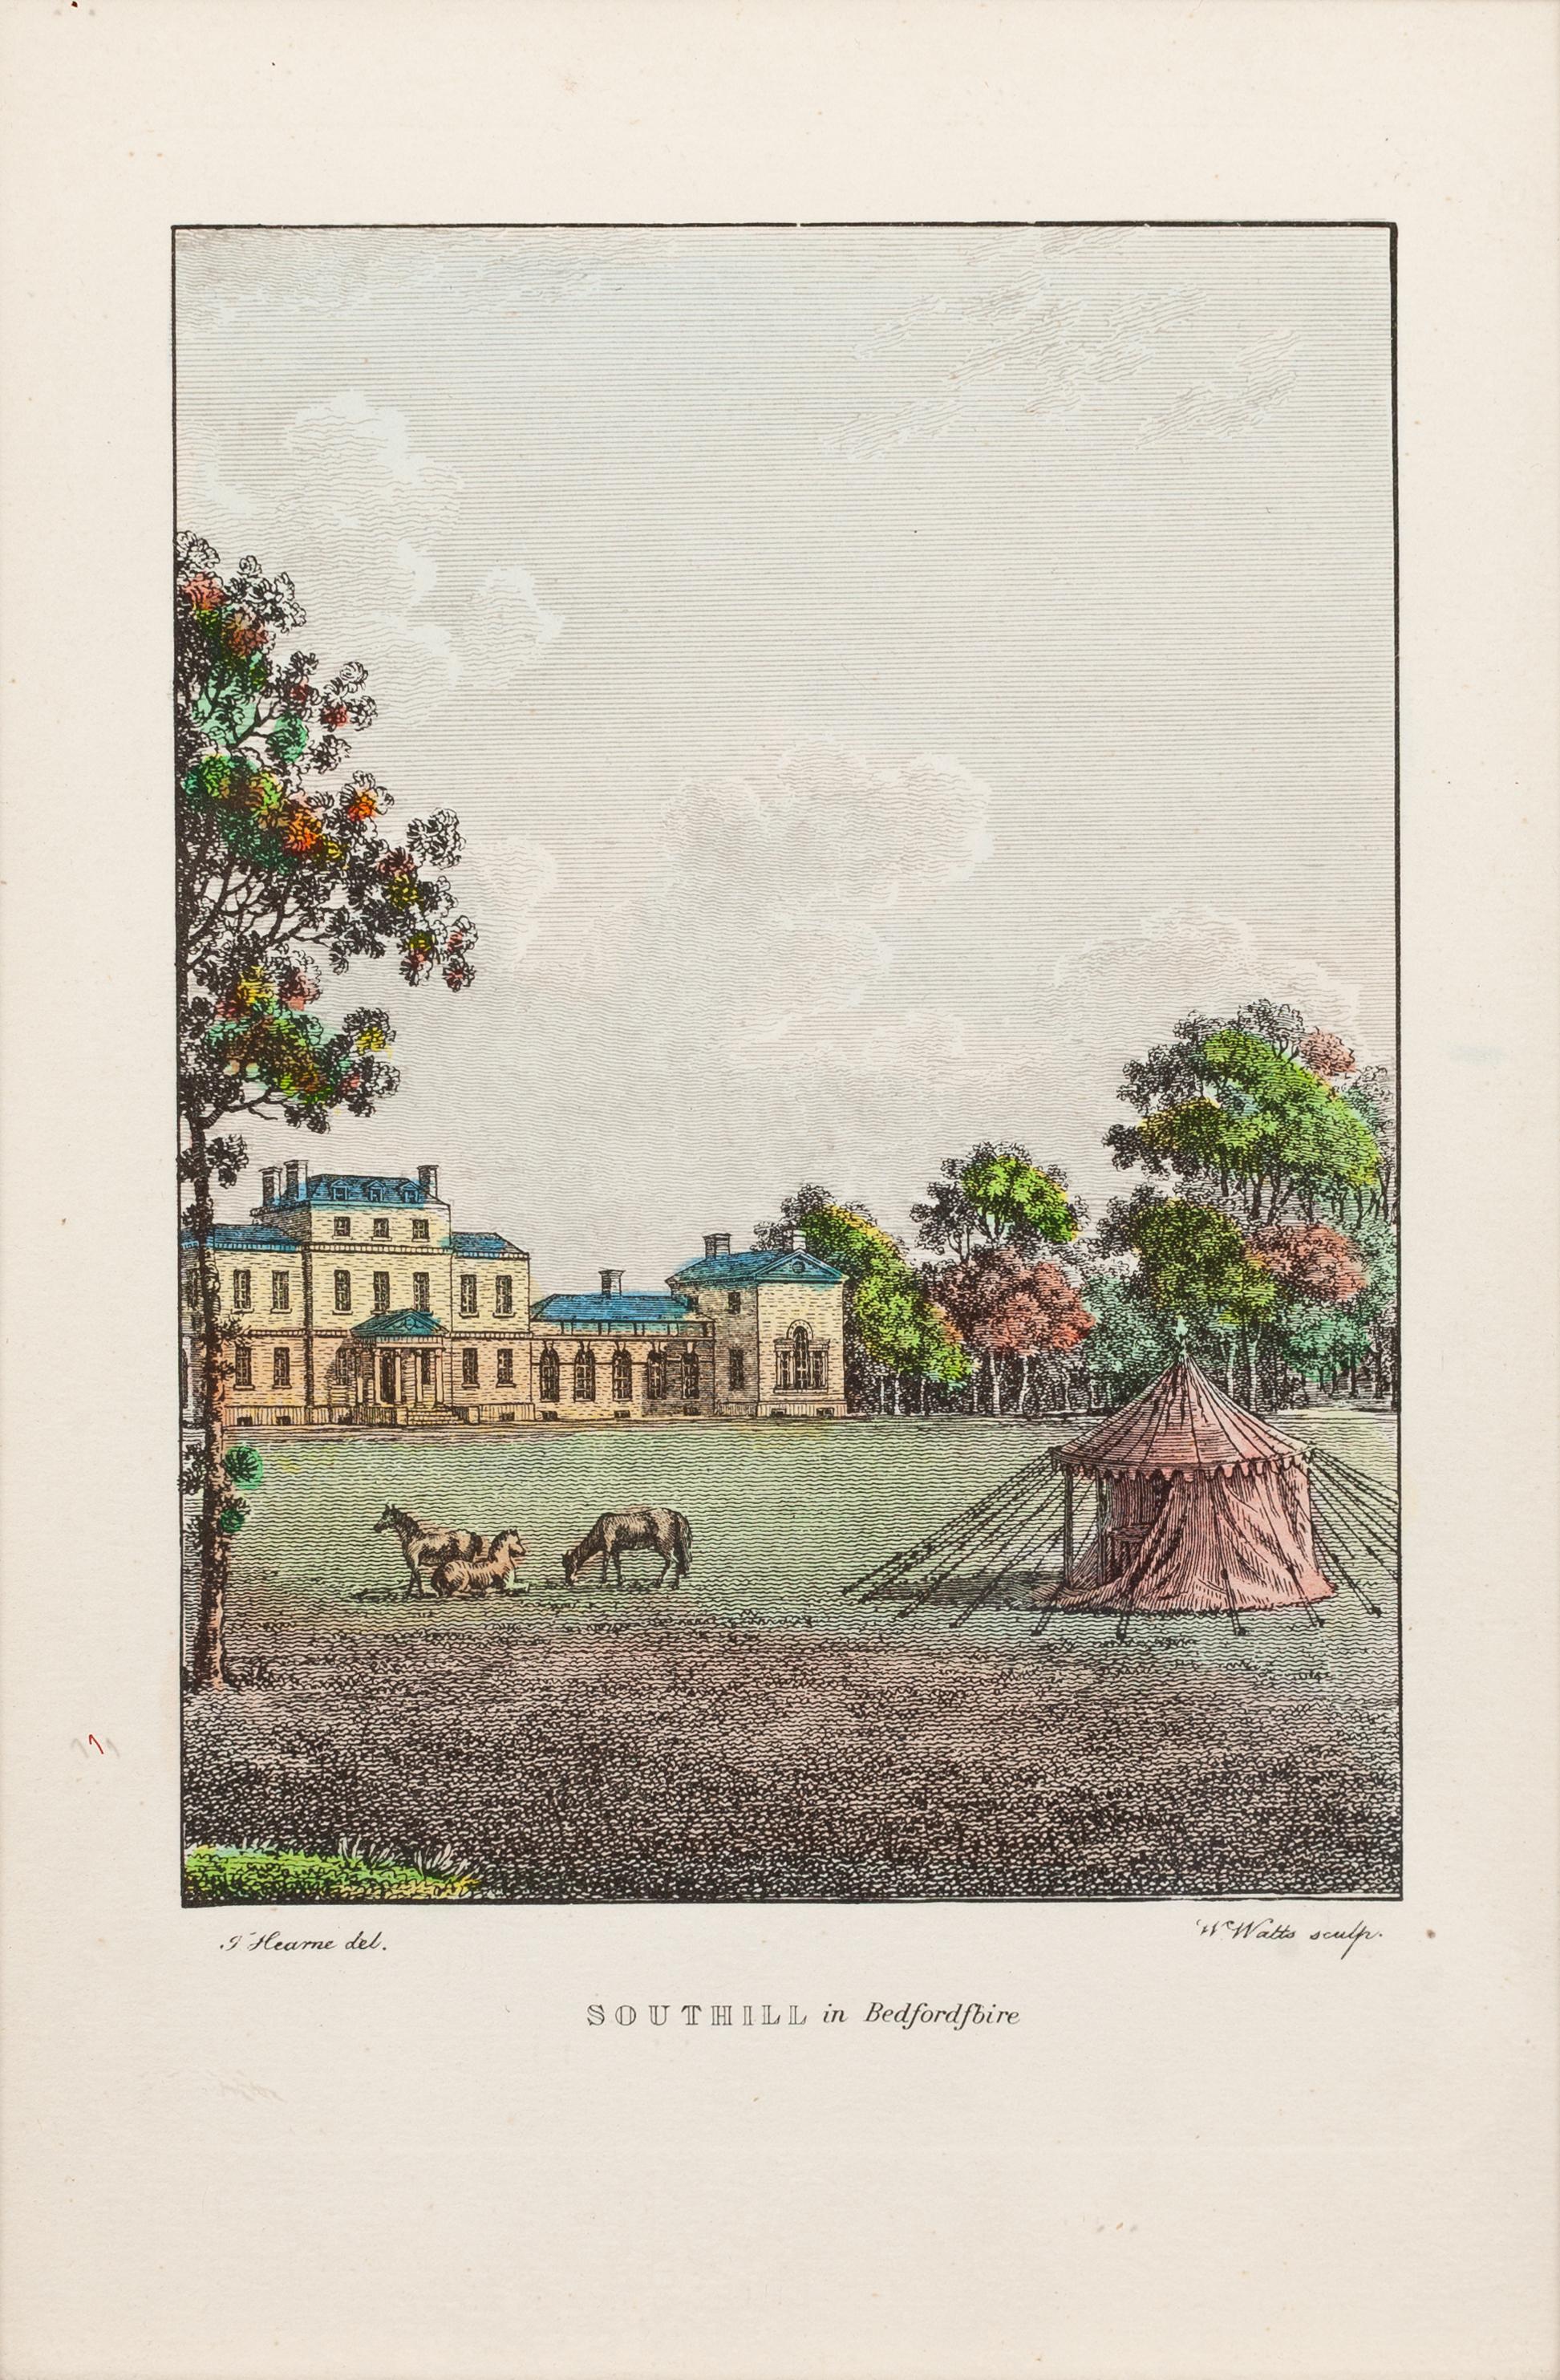 T. Hearne Landscape Print - Southill in Bedfordfloire (English Castles and Landscapes) 